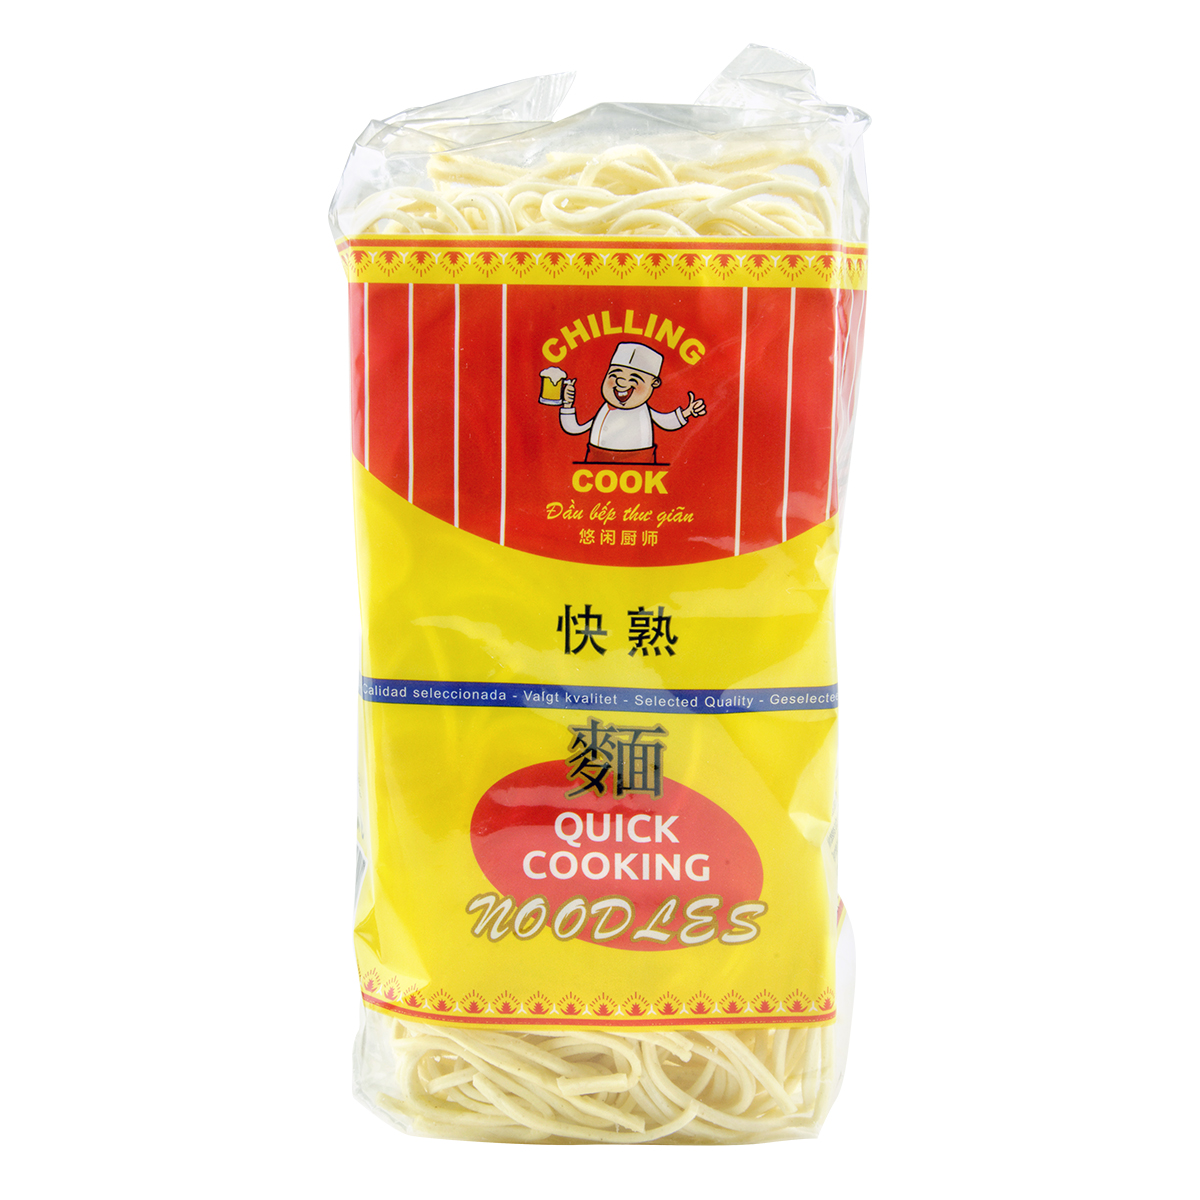 Taitei de grau - Taitei din grau (ramen noodles) CC 500g, asianfood.ro